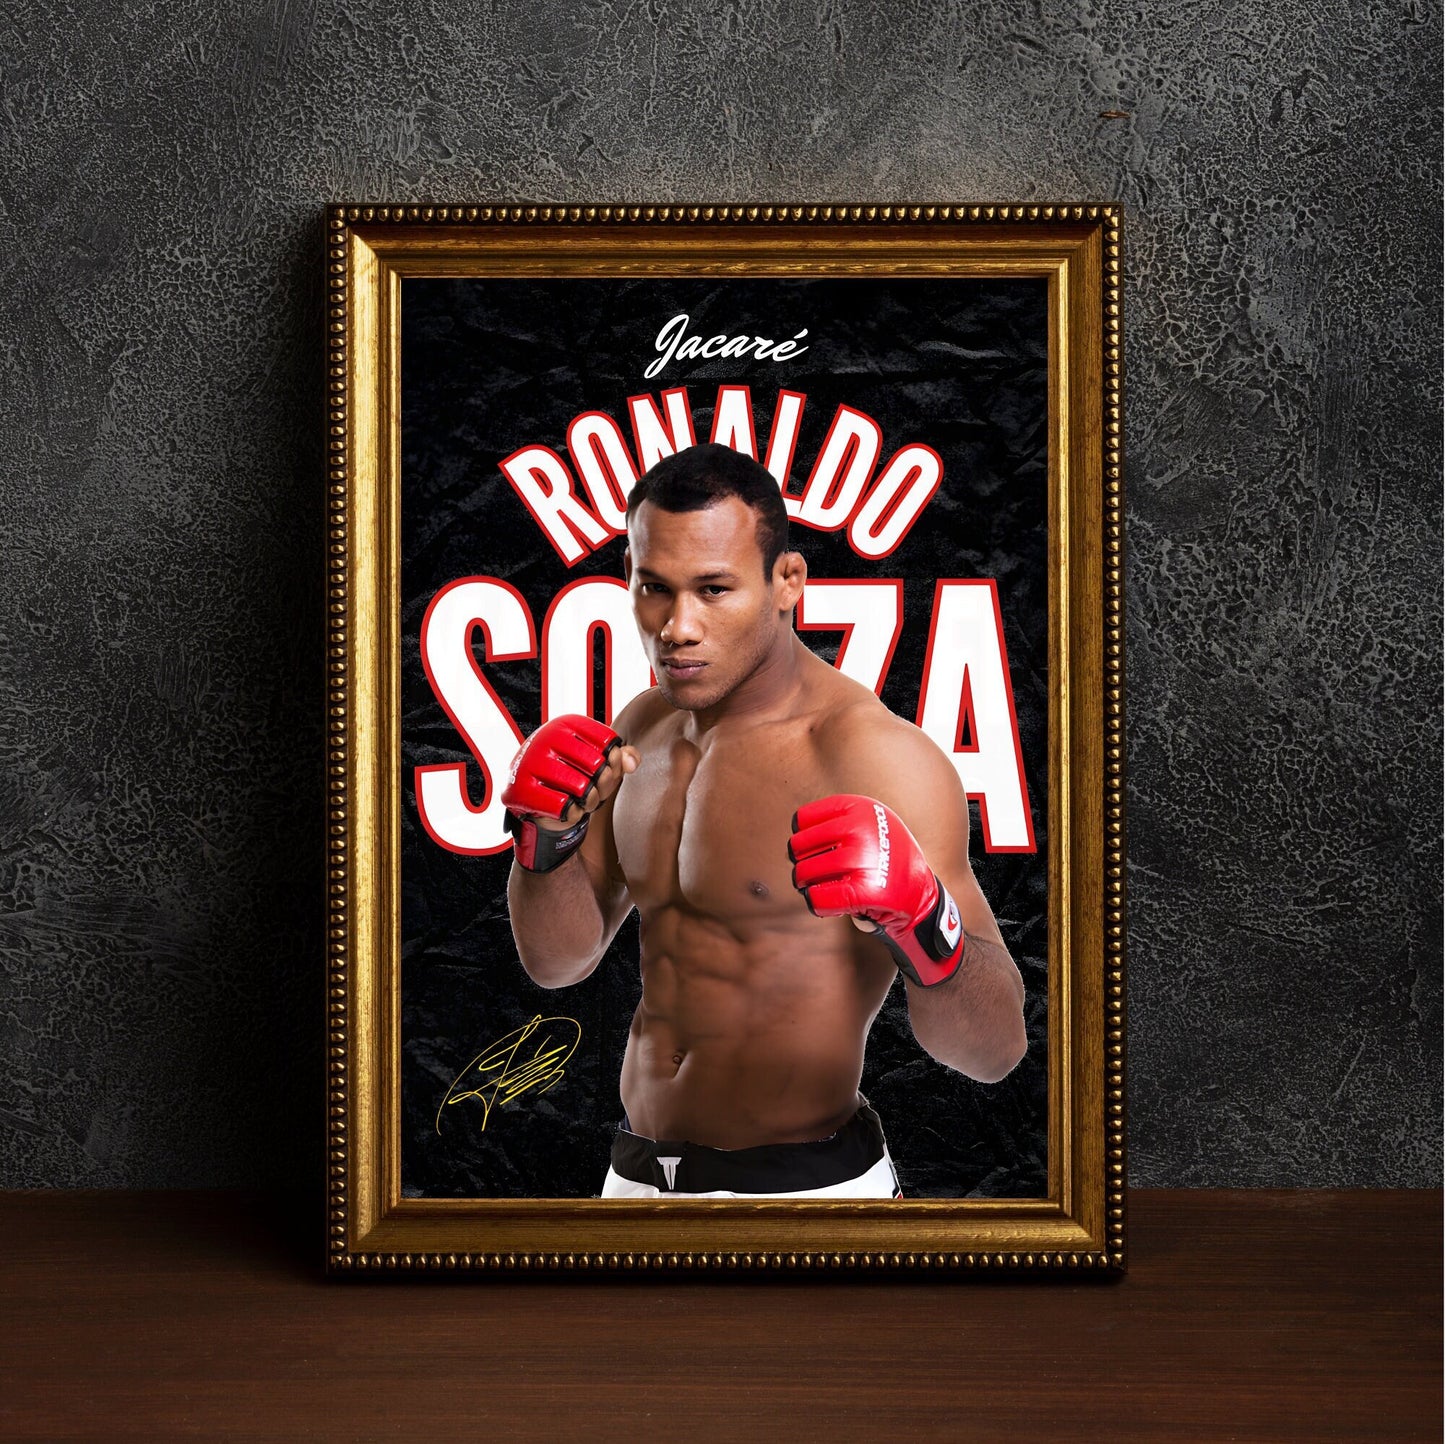 Poster Jacaré Ronaldo Souza